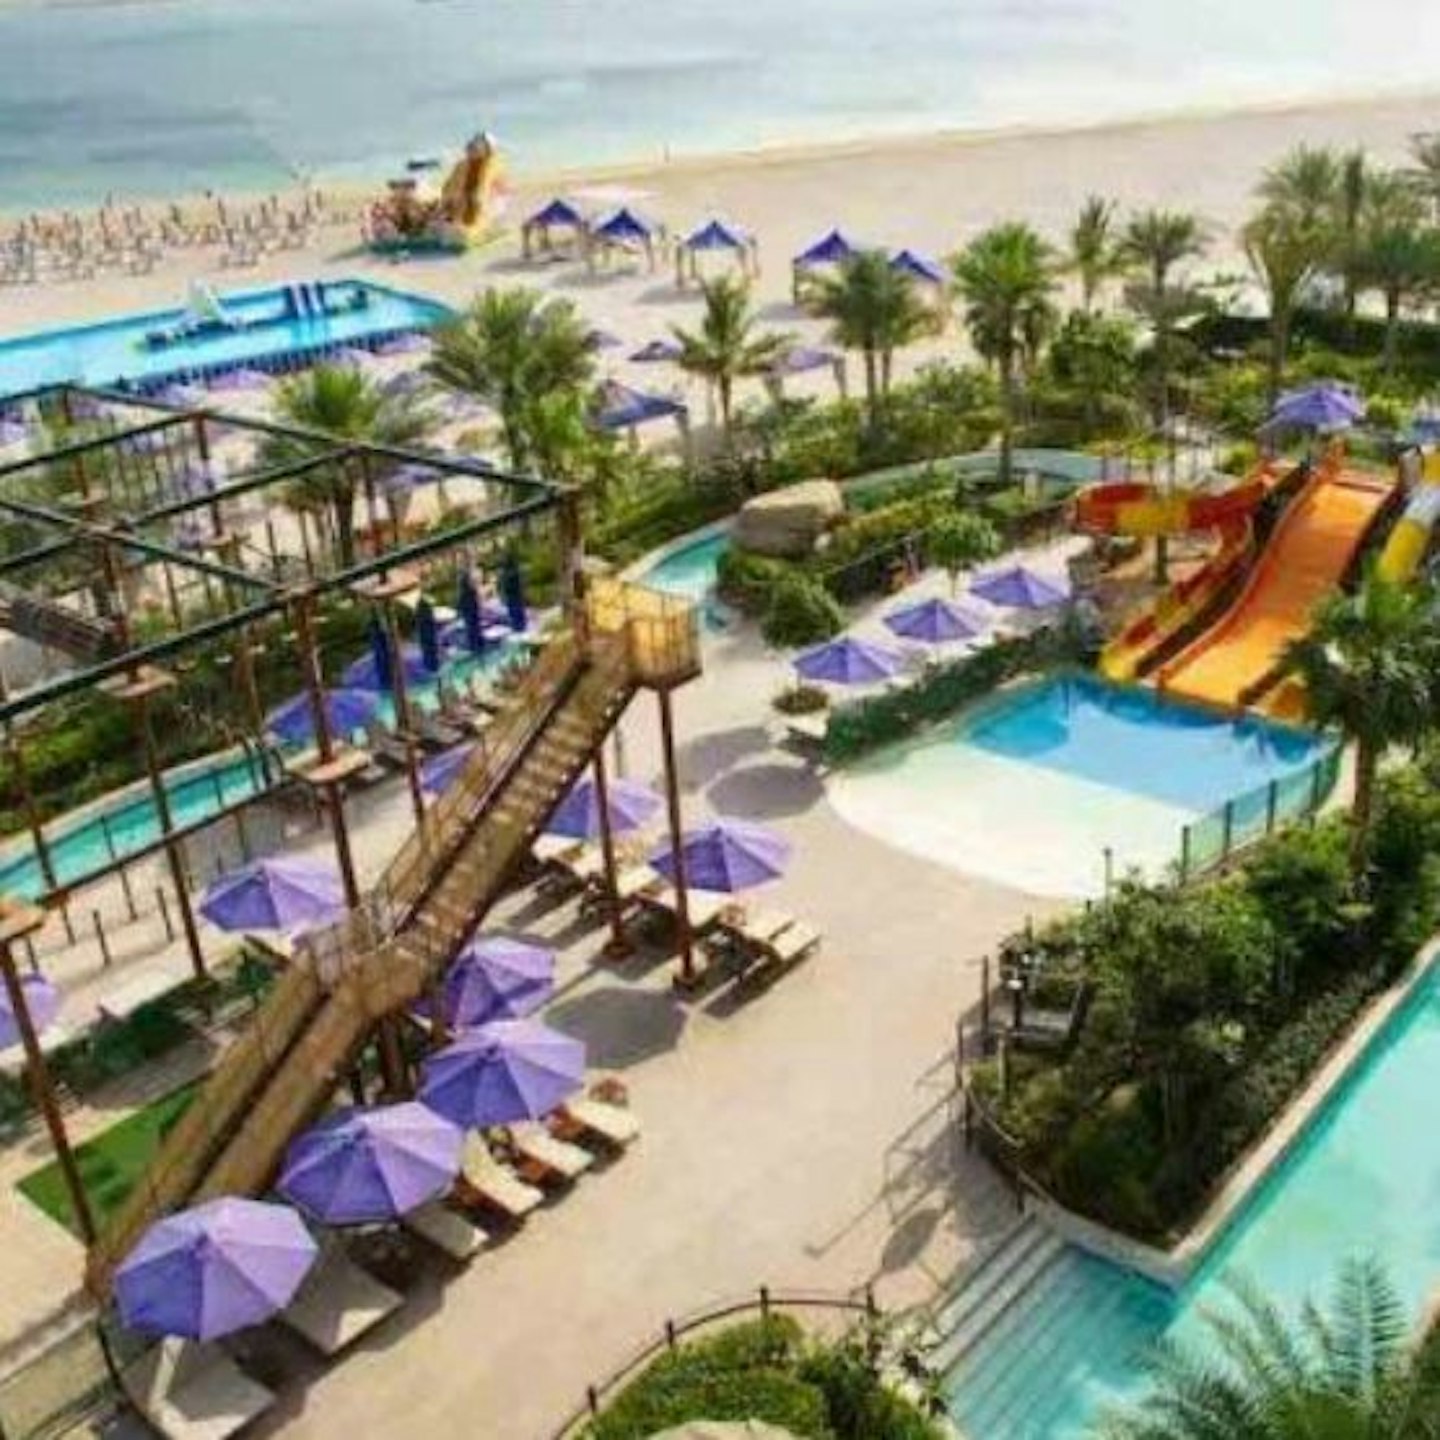 Centara Mirage hotel in Dubai